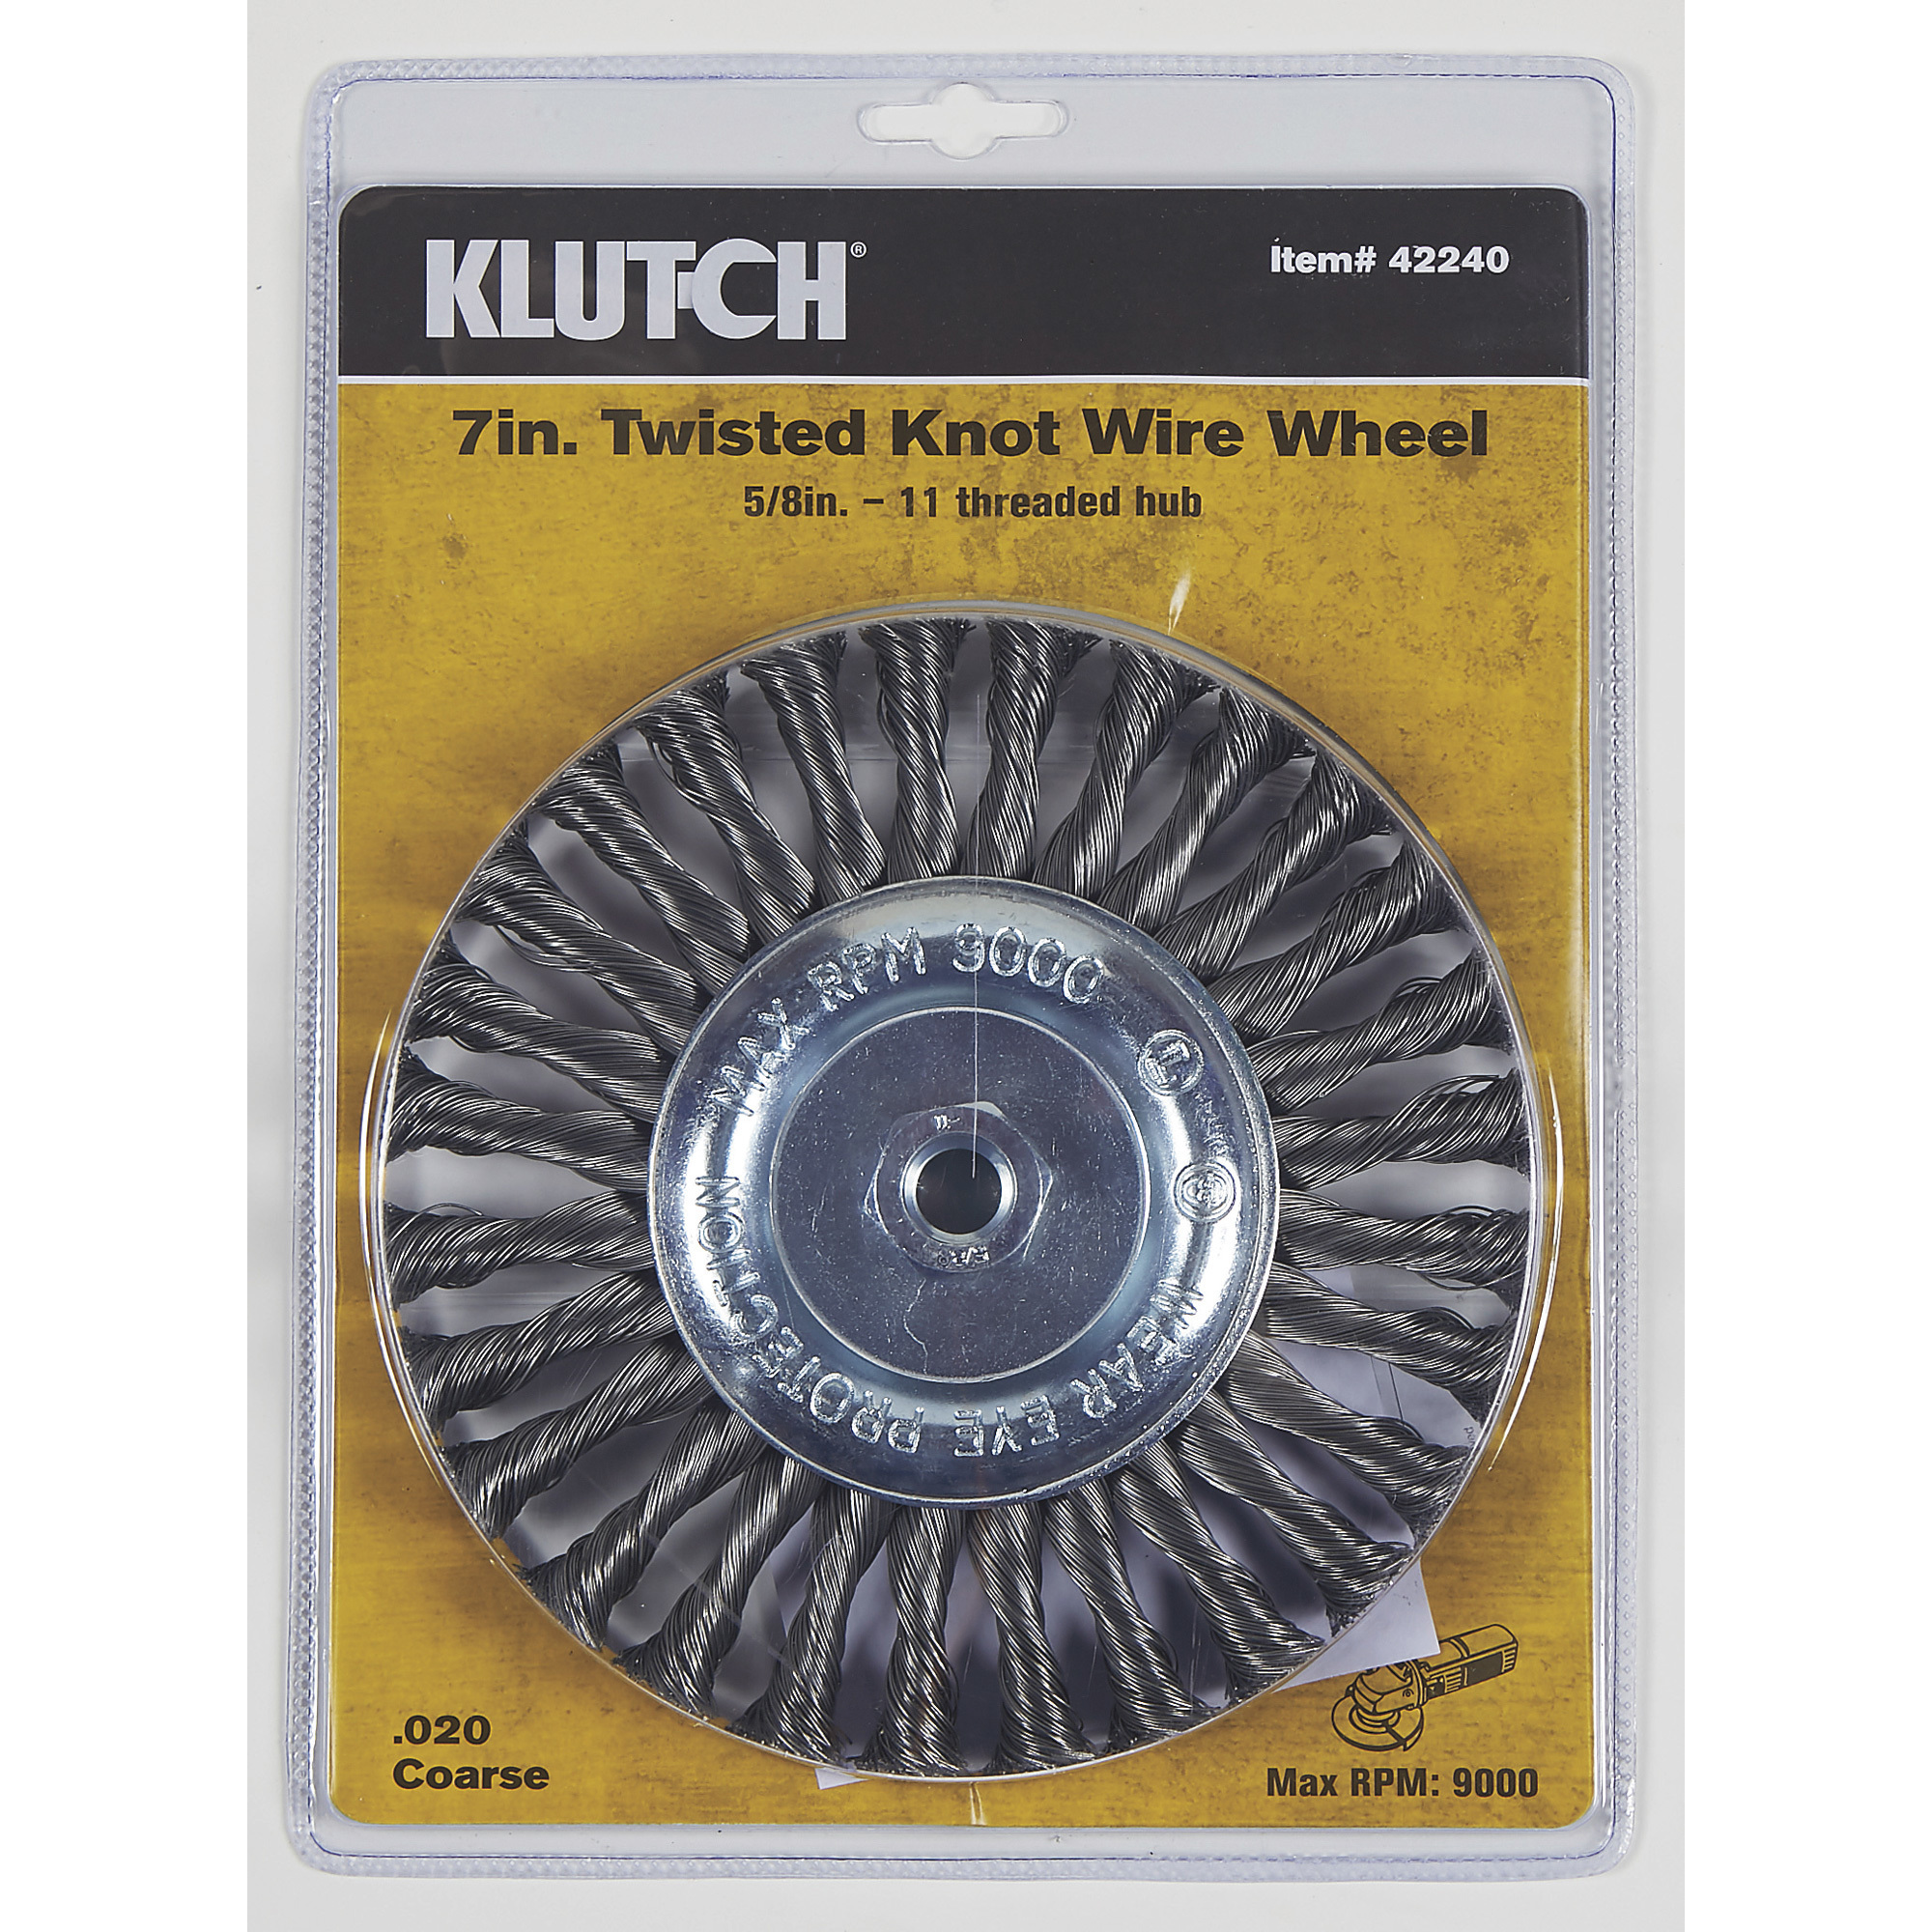 Klutch 7Inch Twisted Knot Wire Wheel